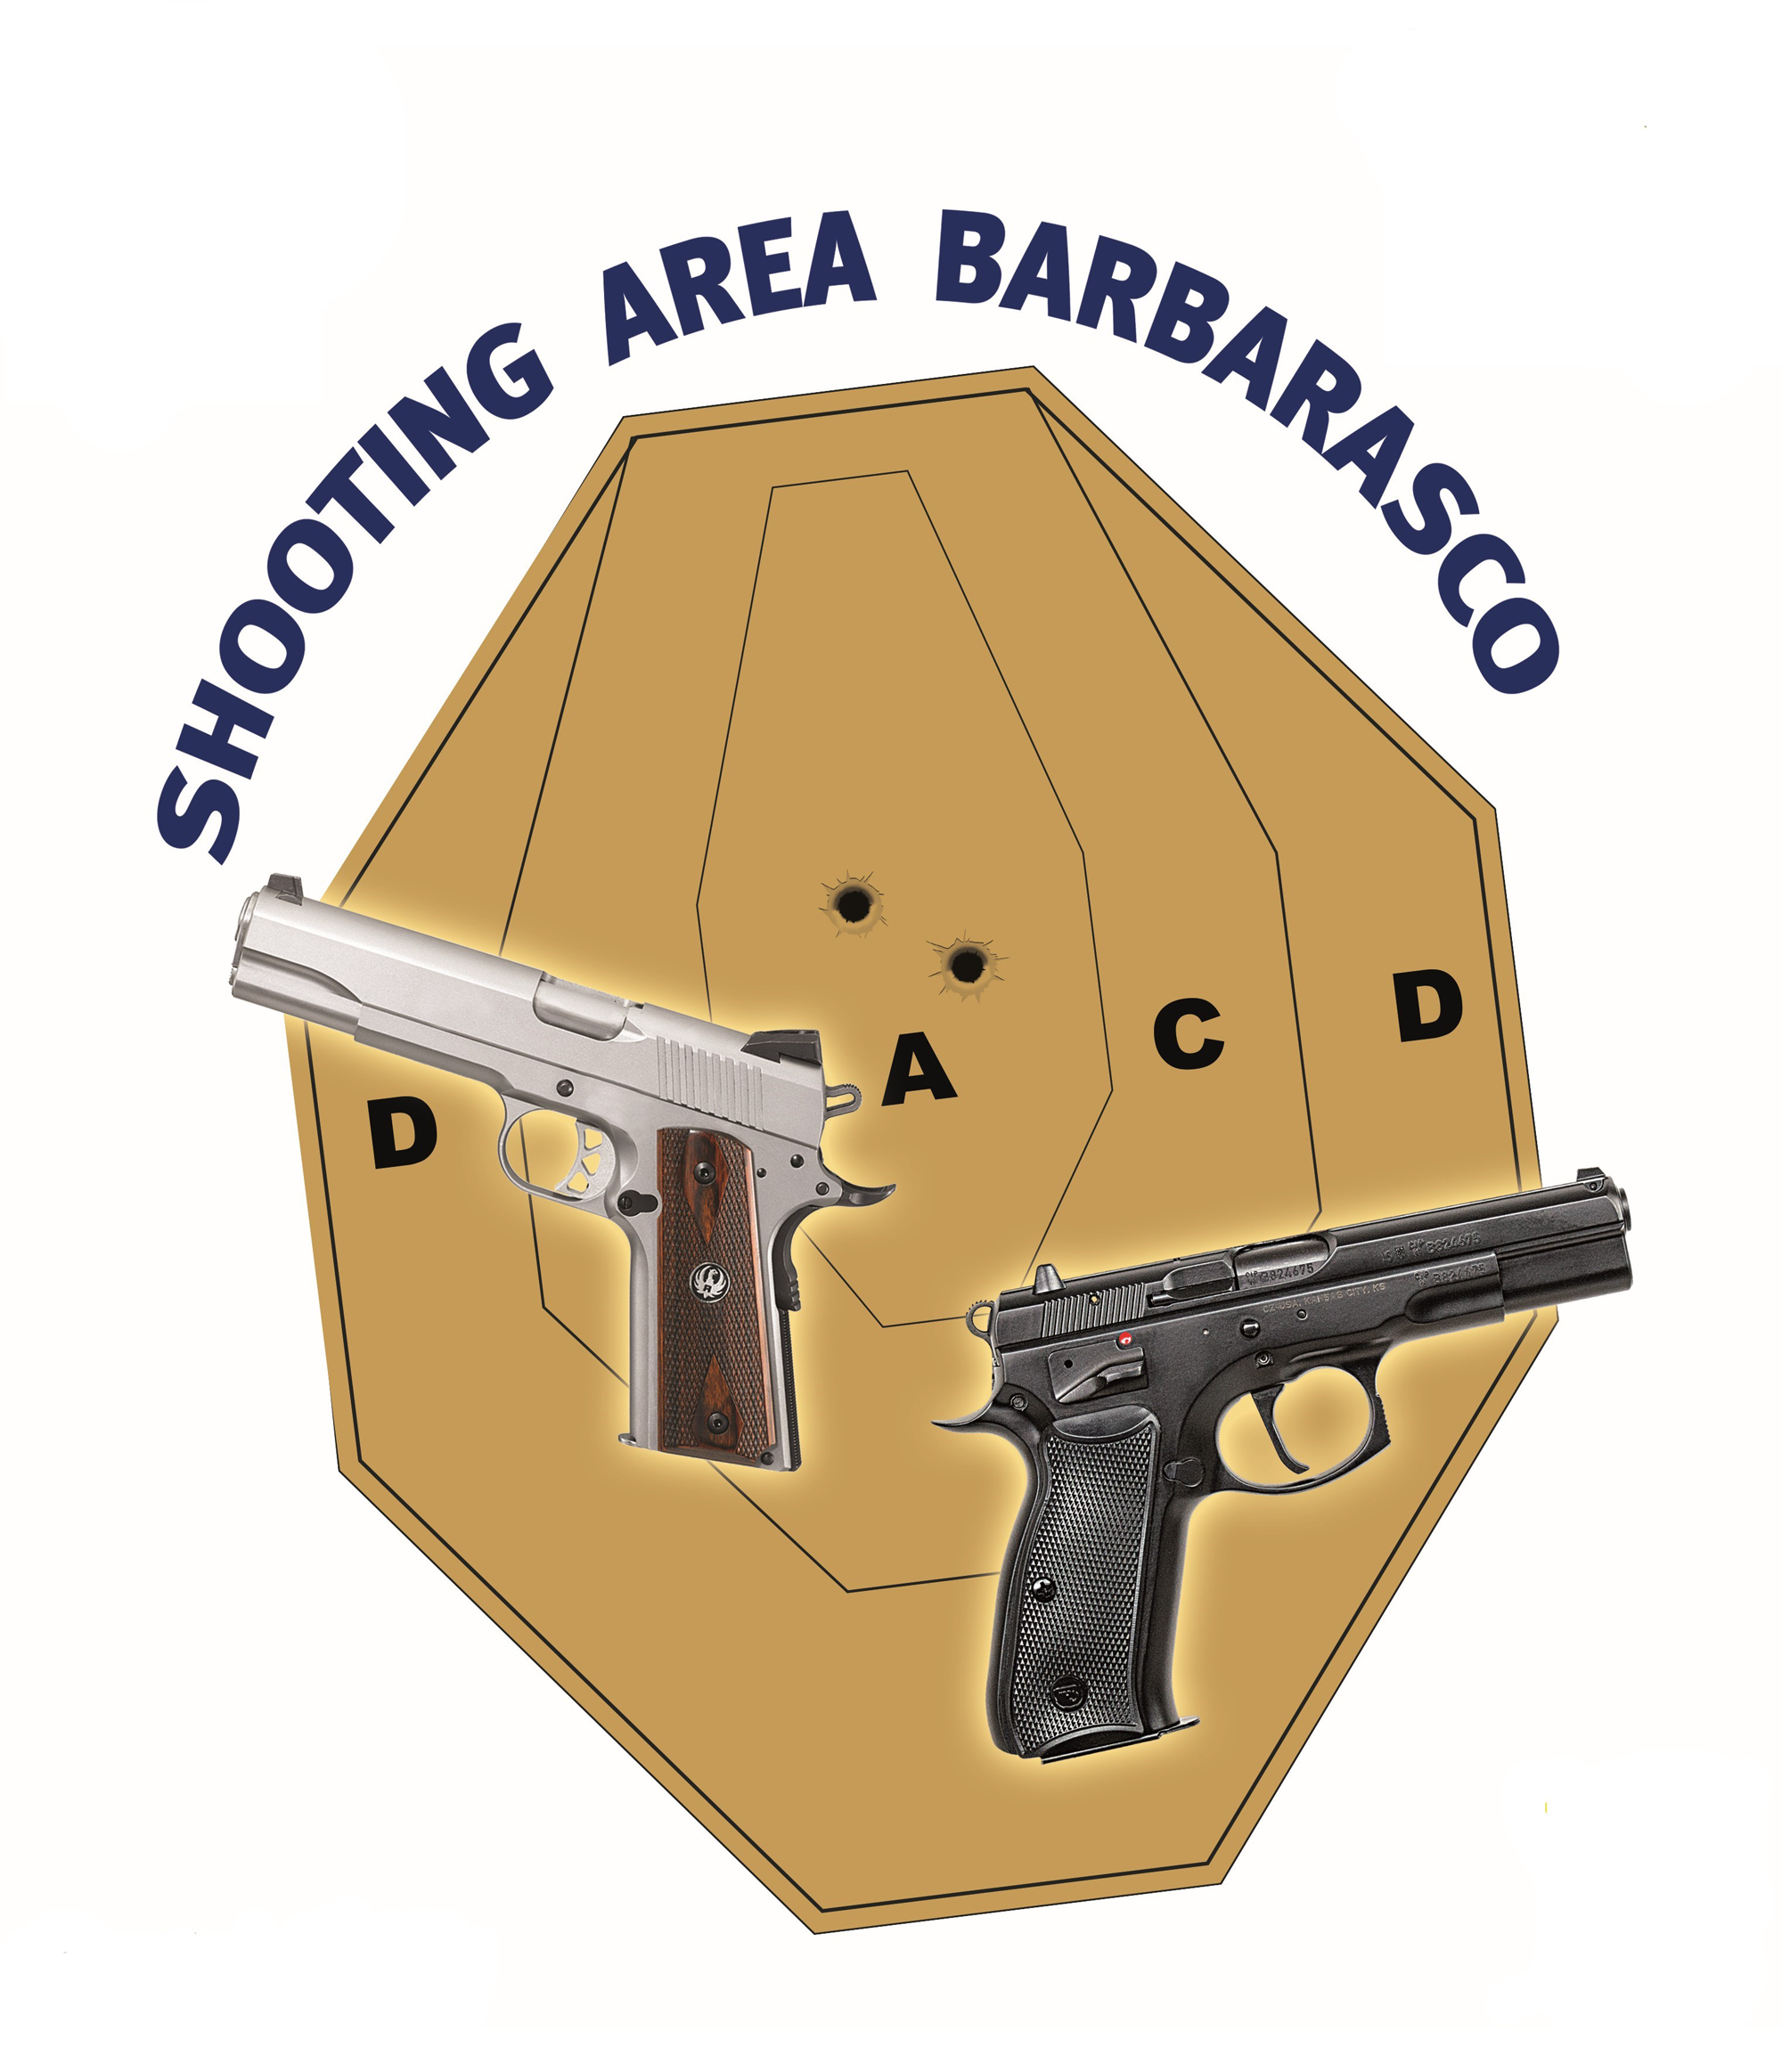 Shooting Area Barbarasco